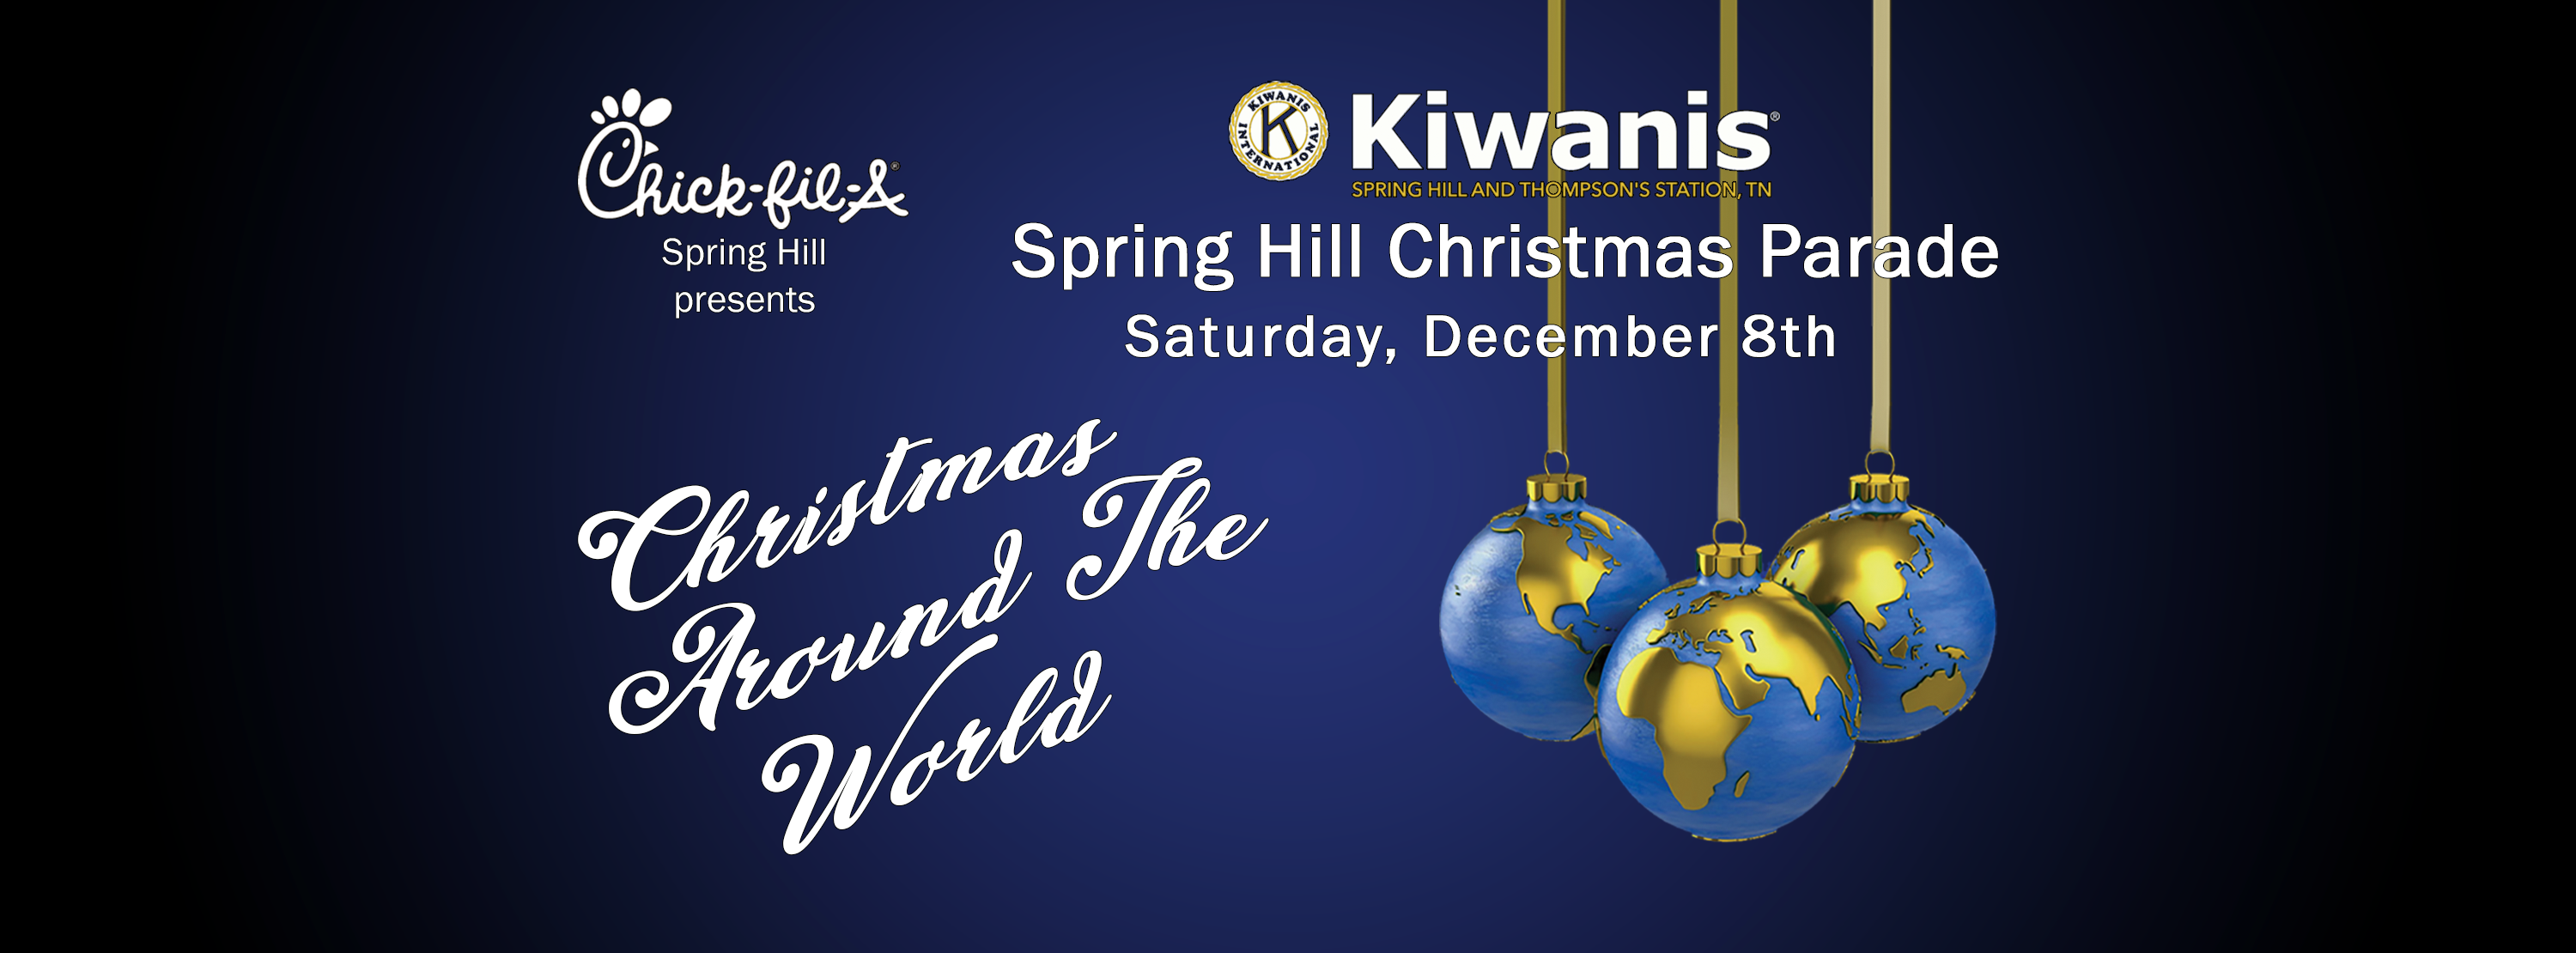 Kiwanis Club Spring Hill Christmas Parade